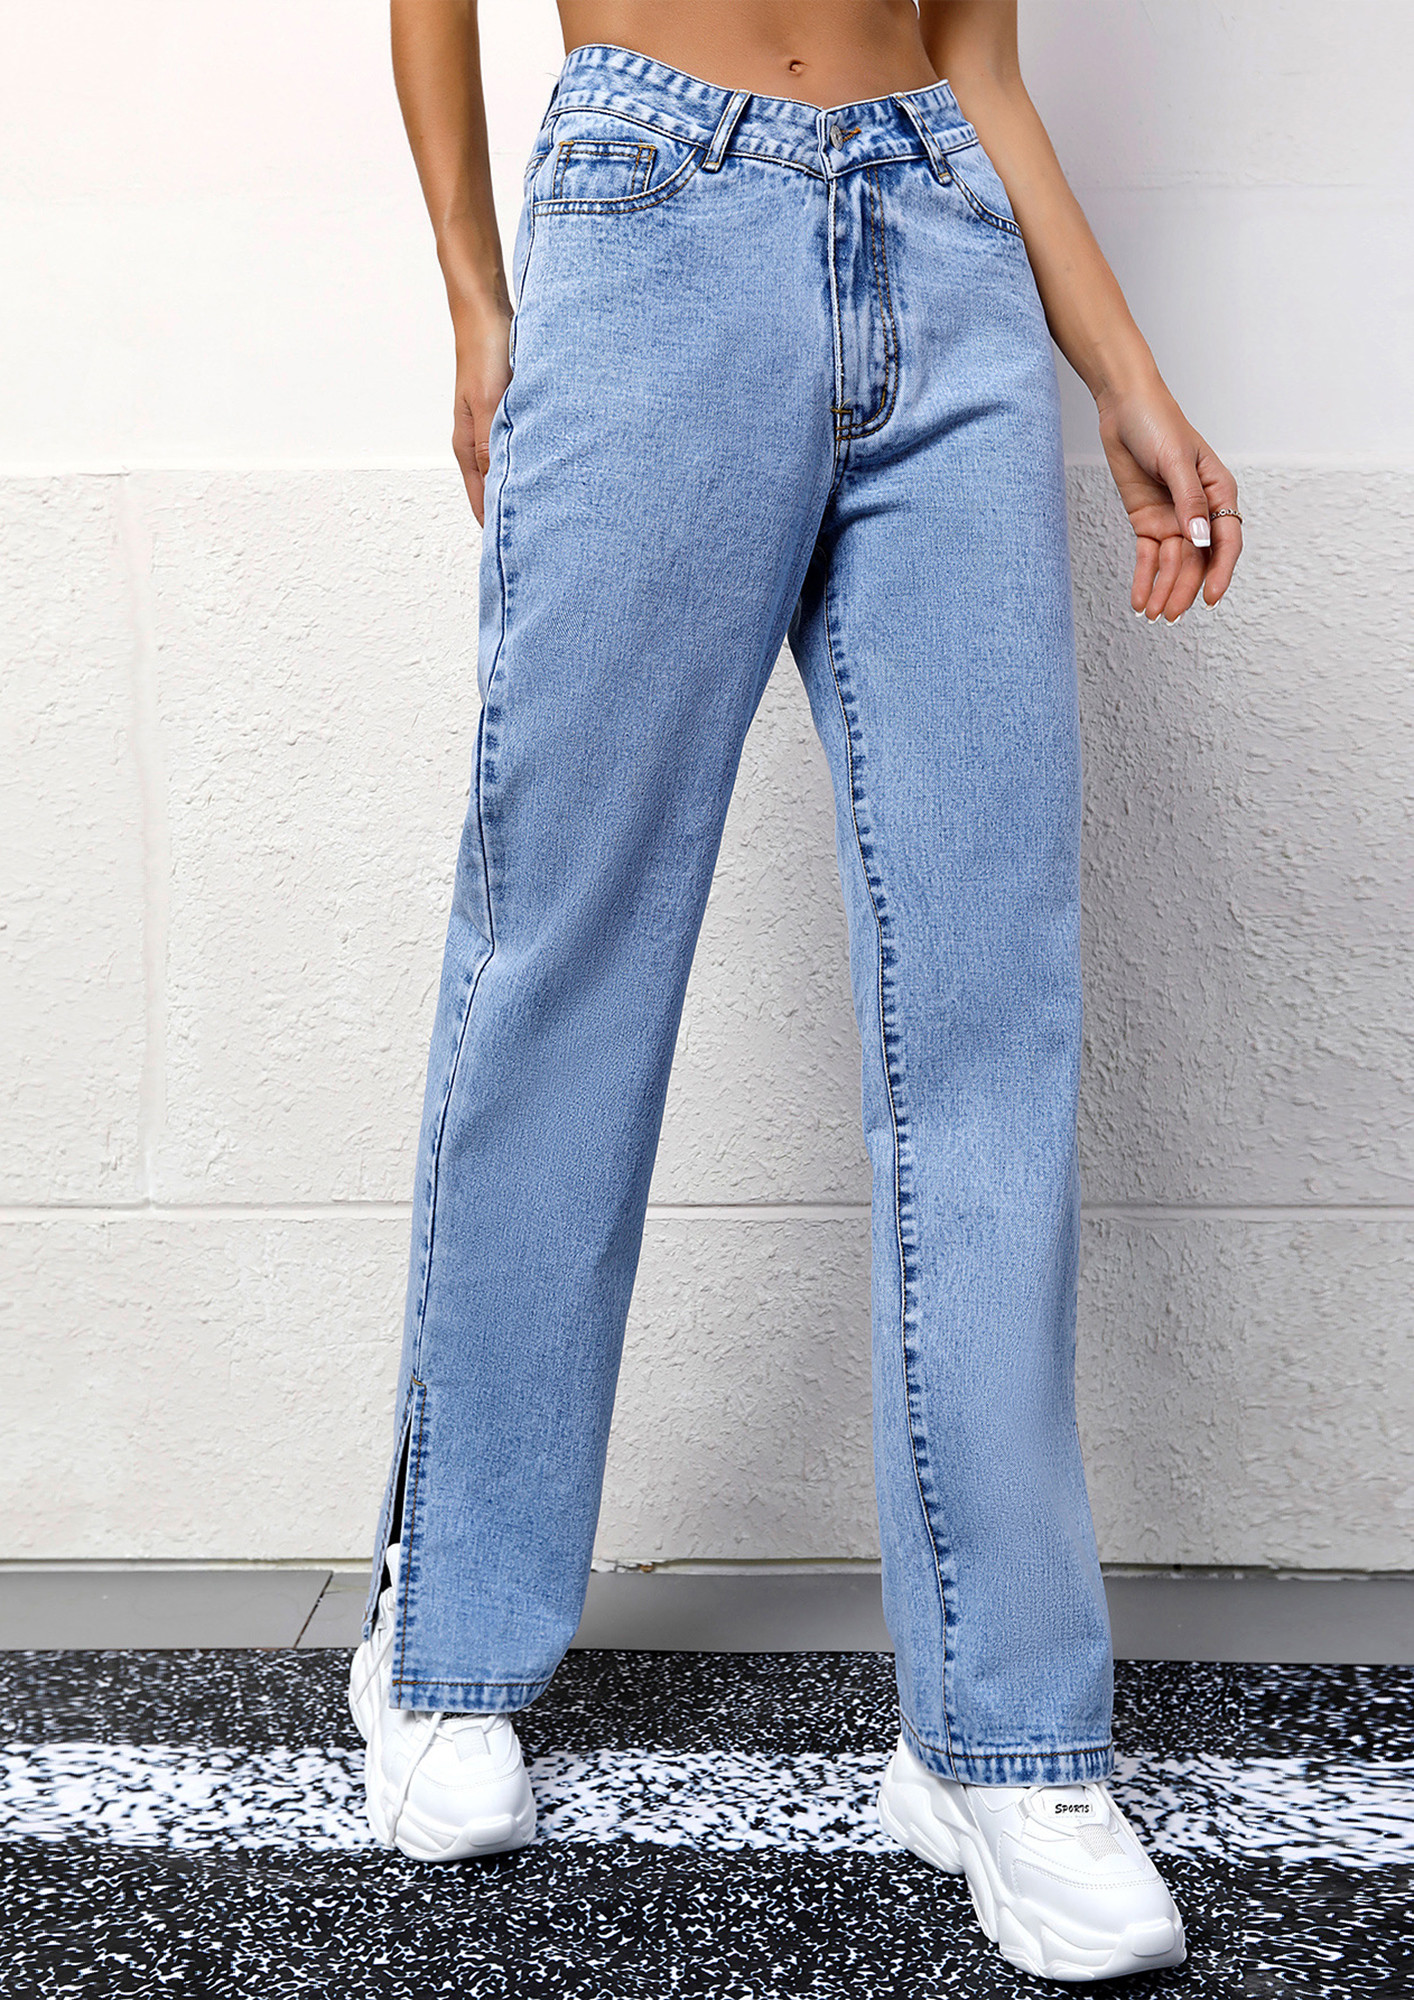 Jeans For Men Men'S Fashion Casual Denim Straight Pants Zipper Fly Pocket  Jeans Trousers - Walmart.com